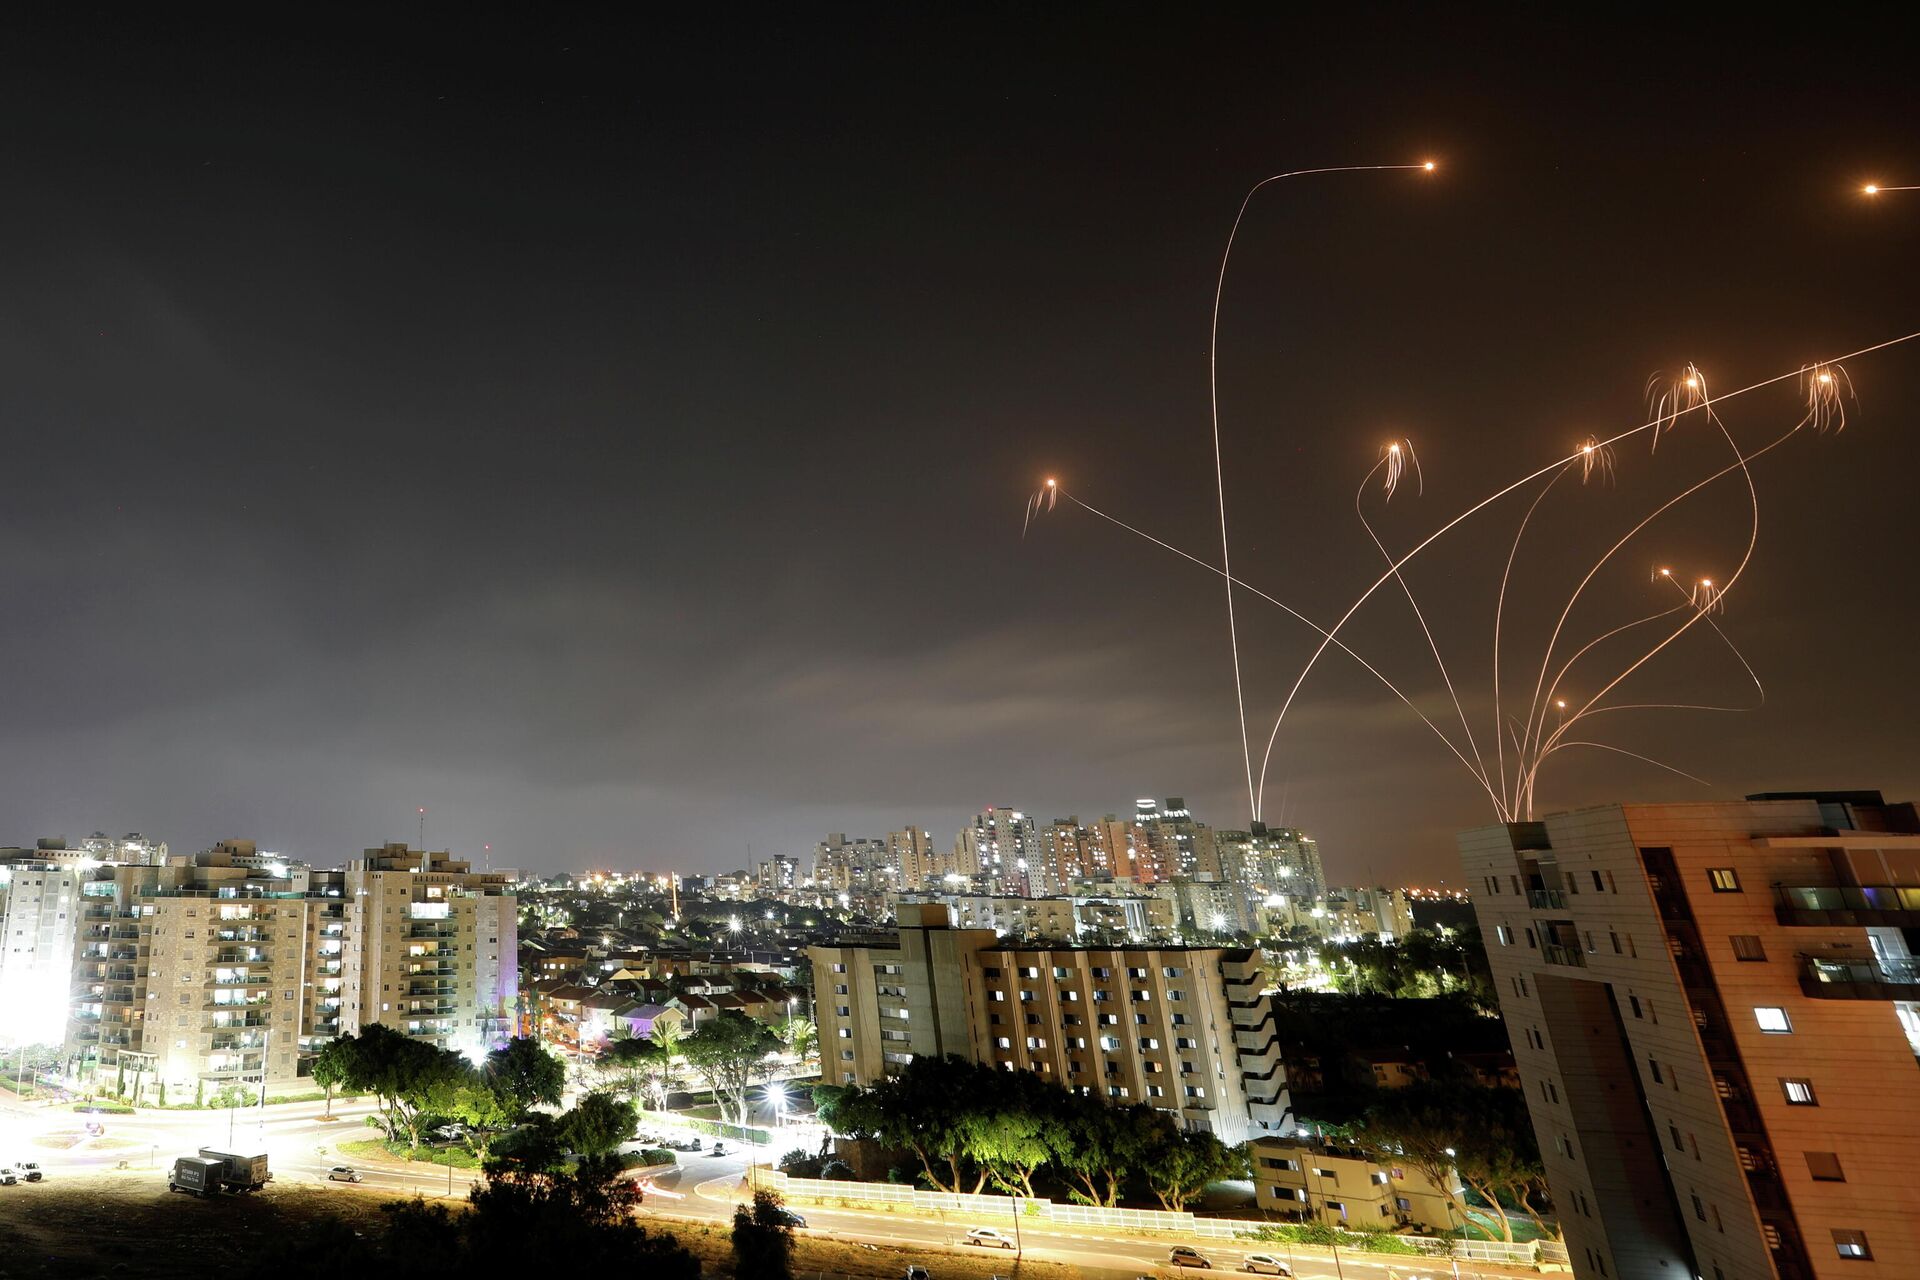 La Cúpula de Hierro israelí intercepta misiles lanzados desde Gaza - Sputnik Mundo, 1920, 23.05.2021